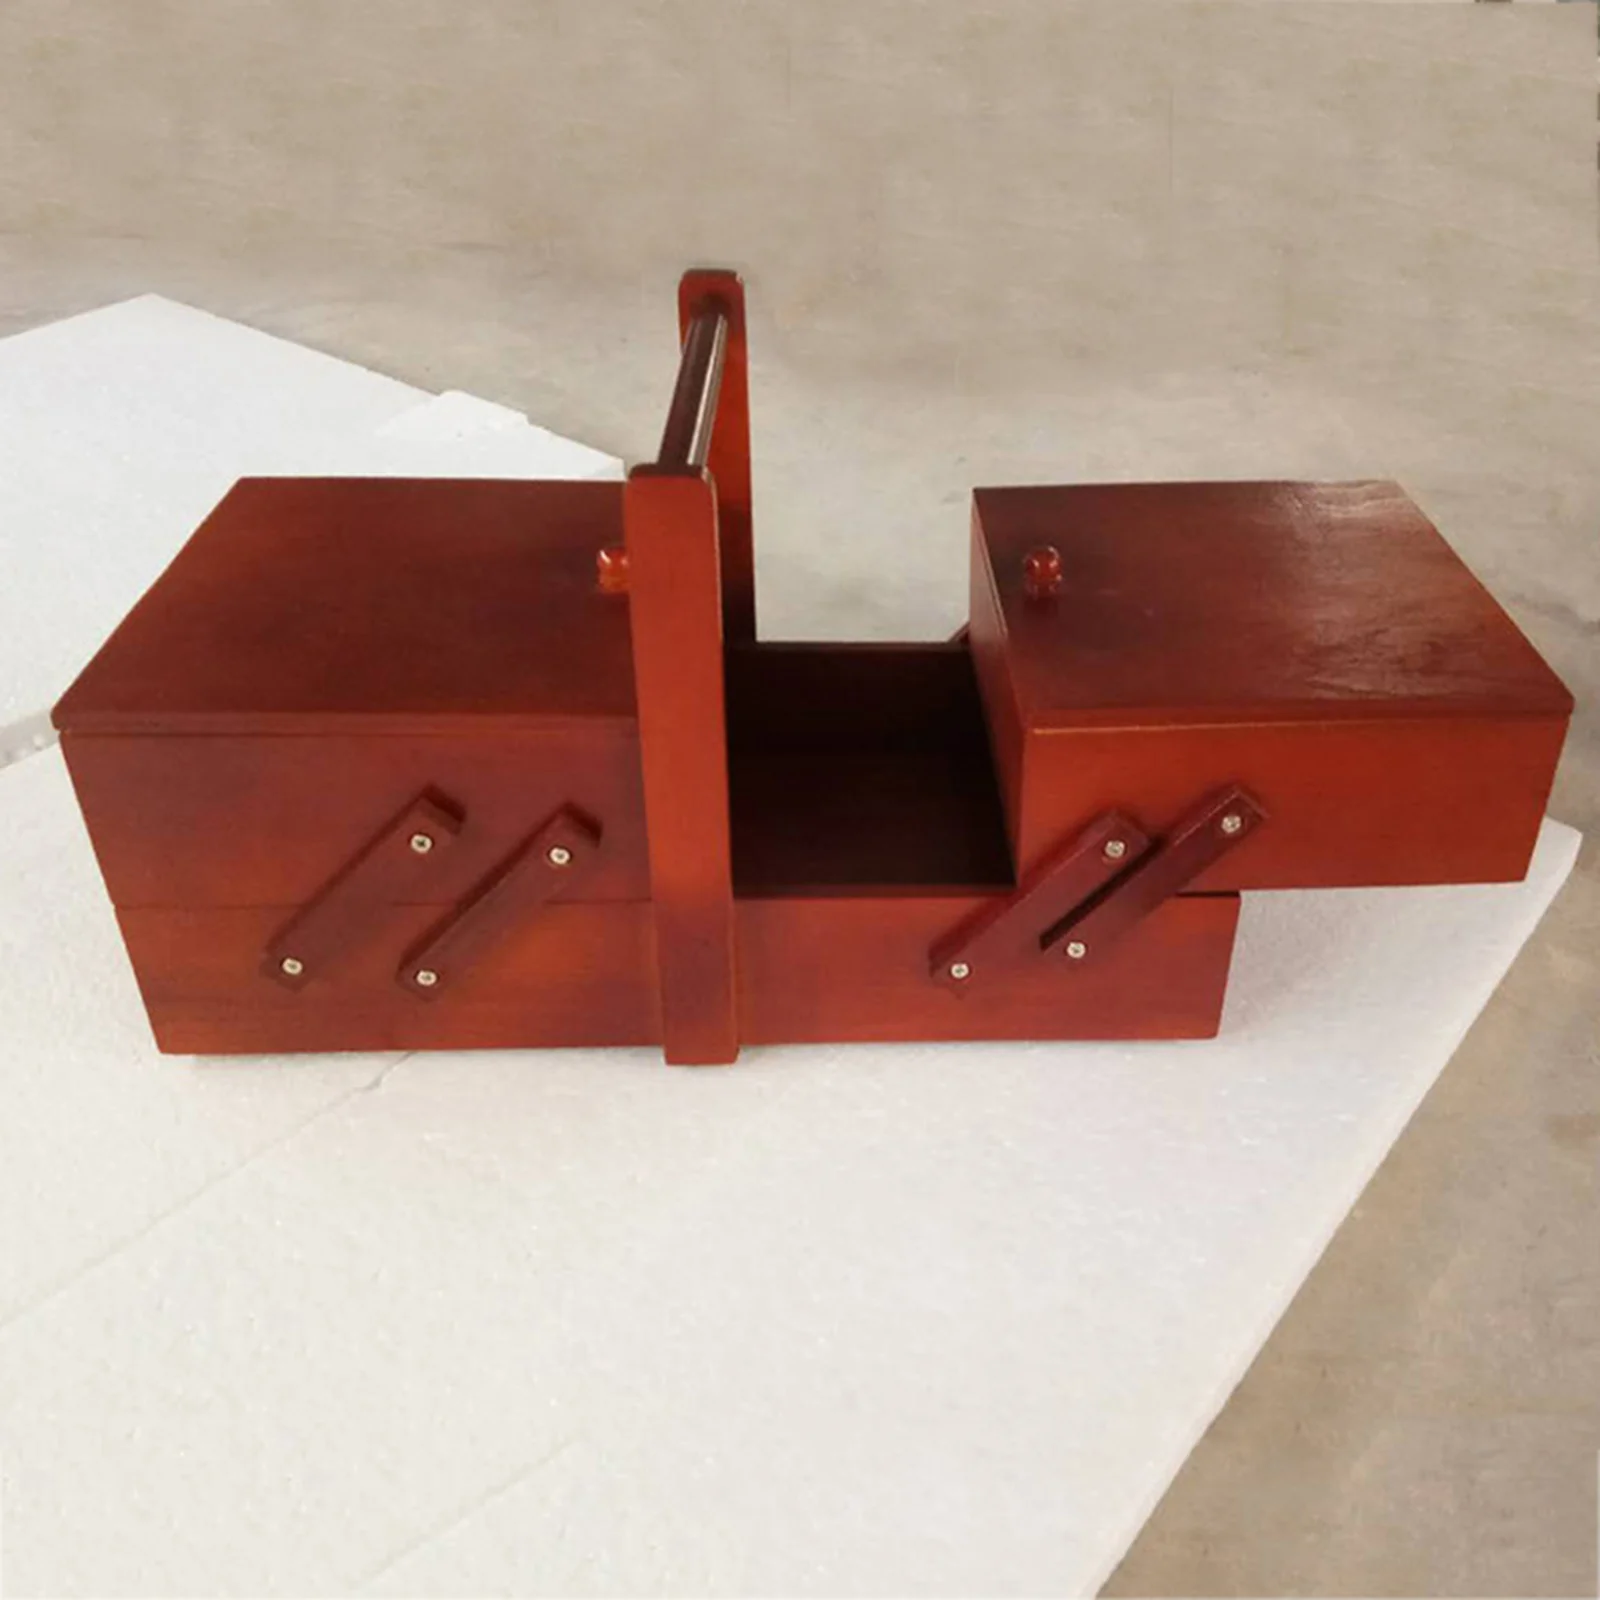 Wooden Sewing Box Jewelry Storage Box Cosmetics Case Organizer For Home Jewelry/Sewing Kits Storage Box